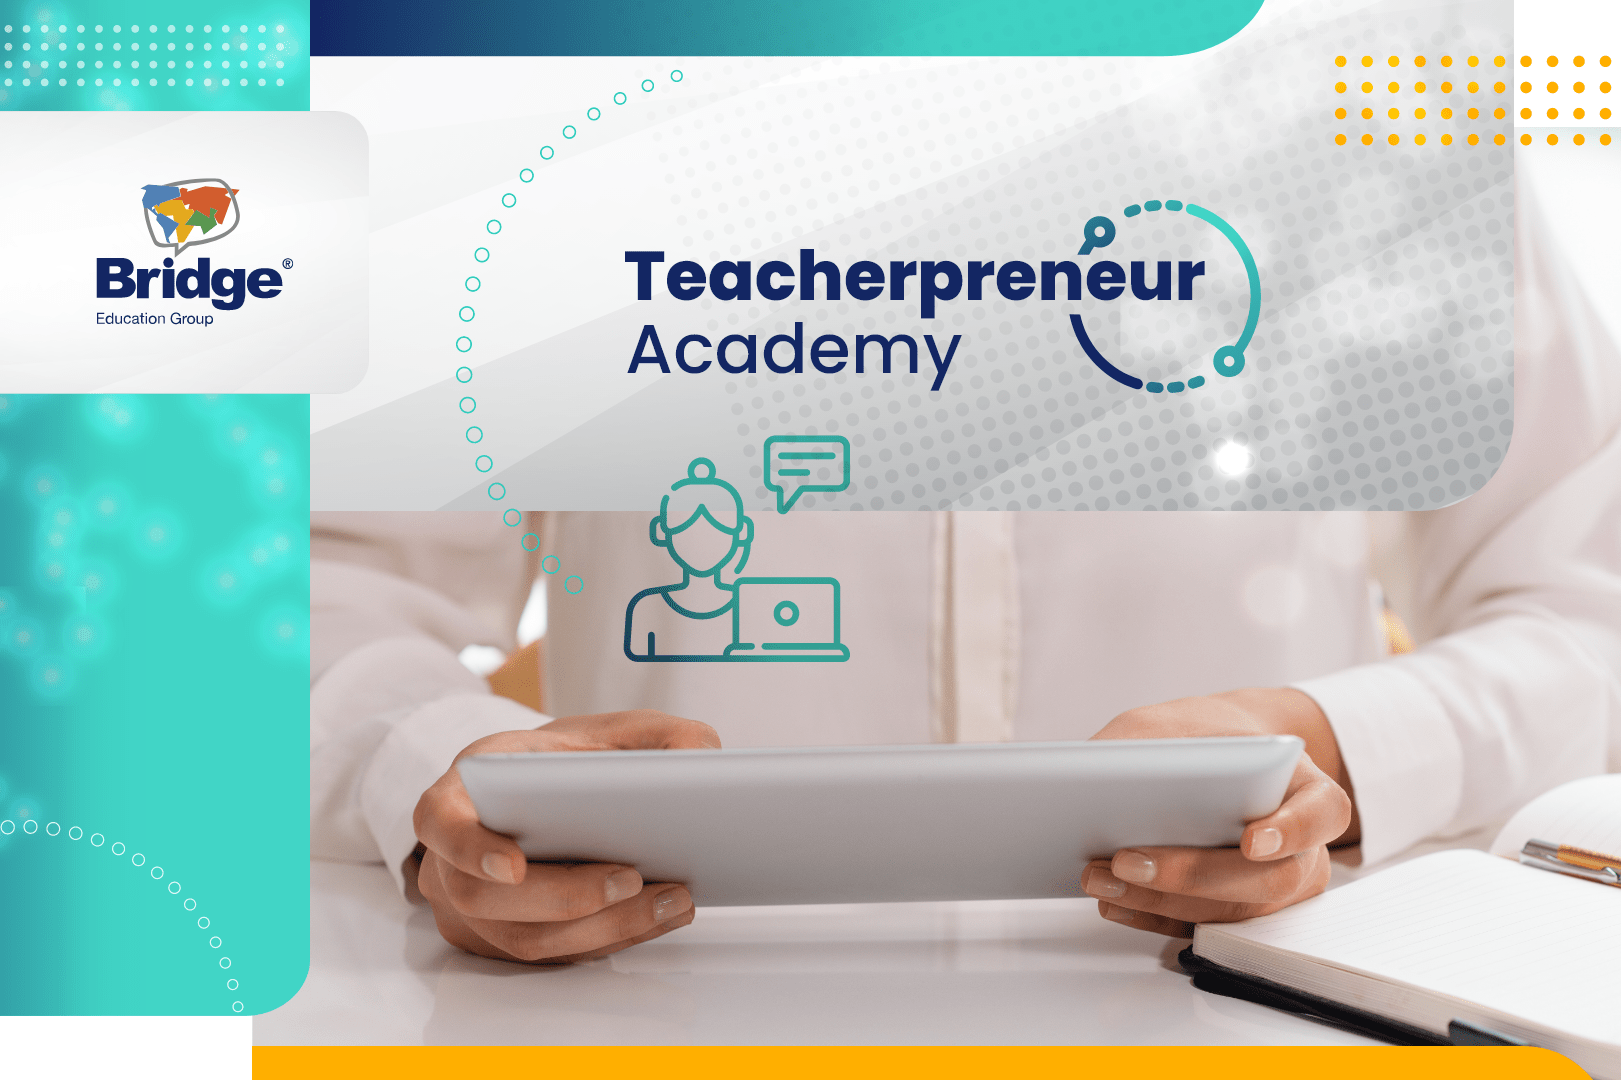 Teacherpreneur Academy title with person holding tablet